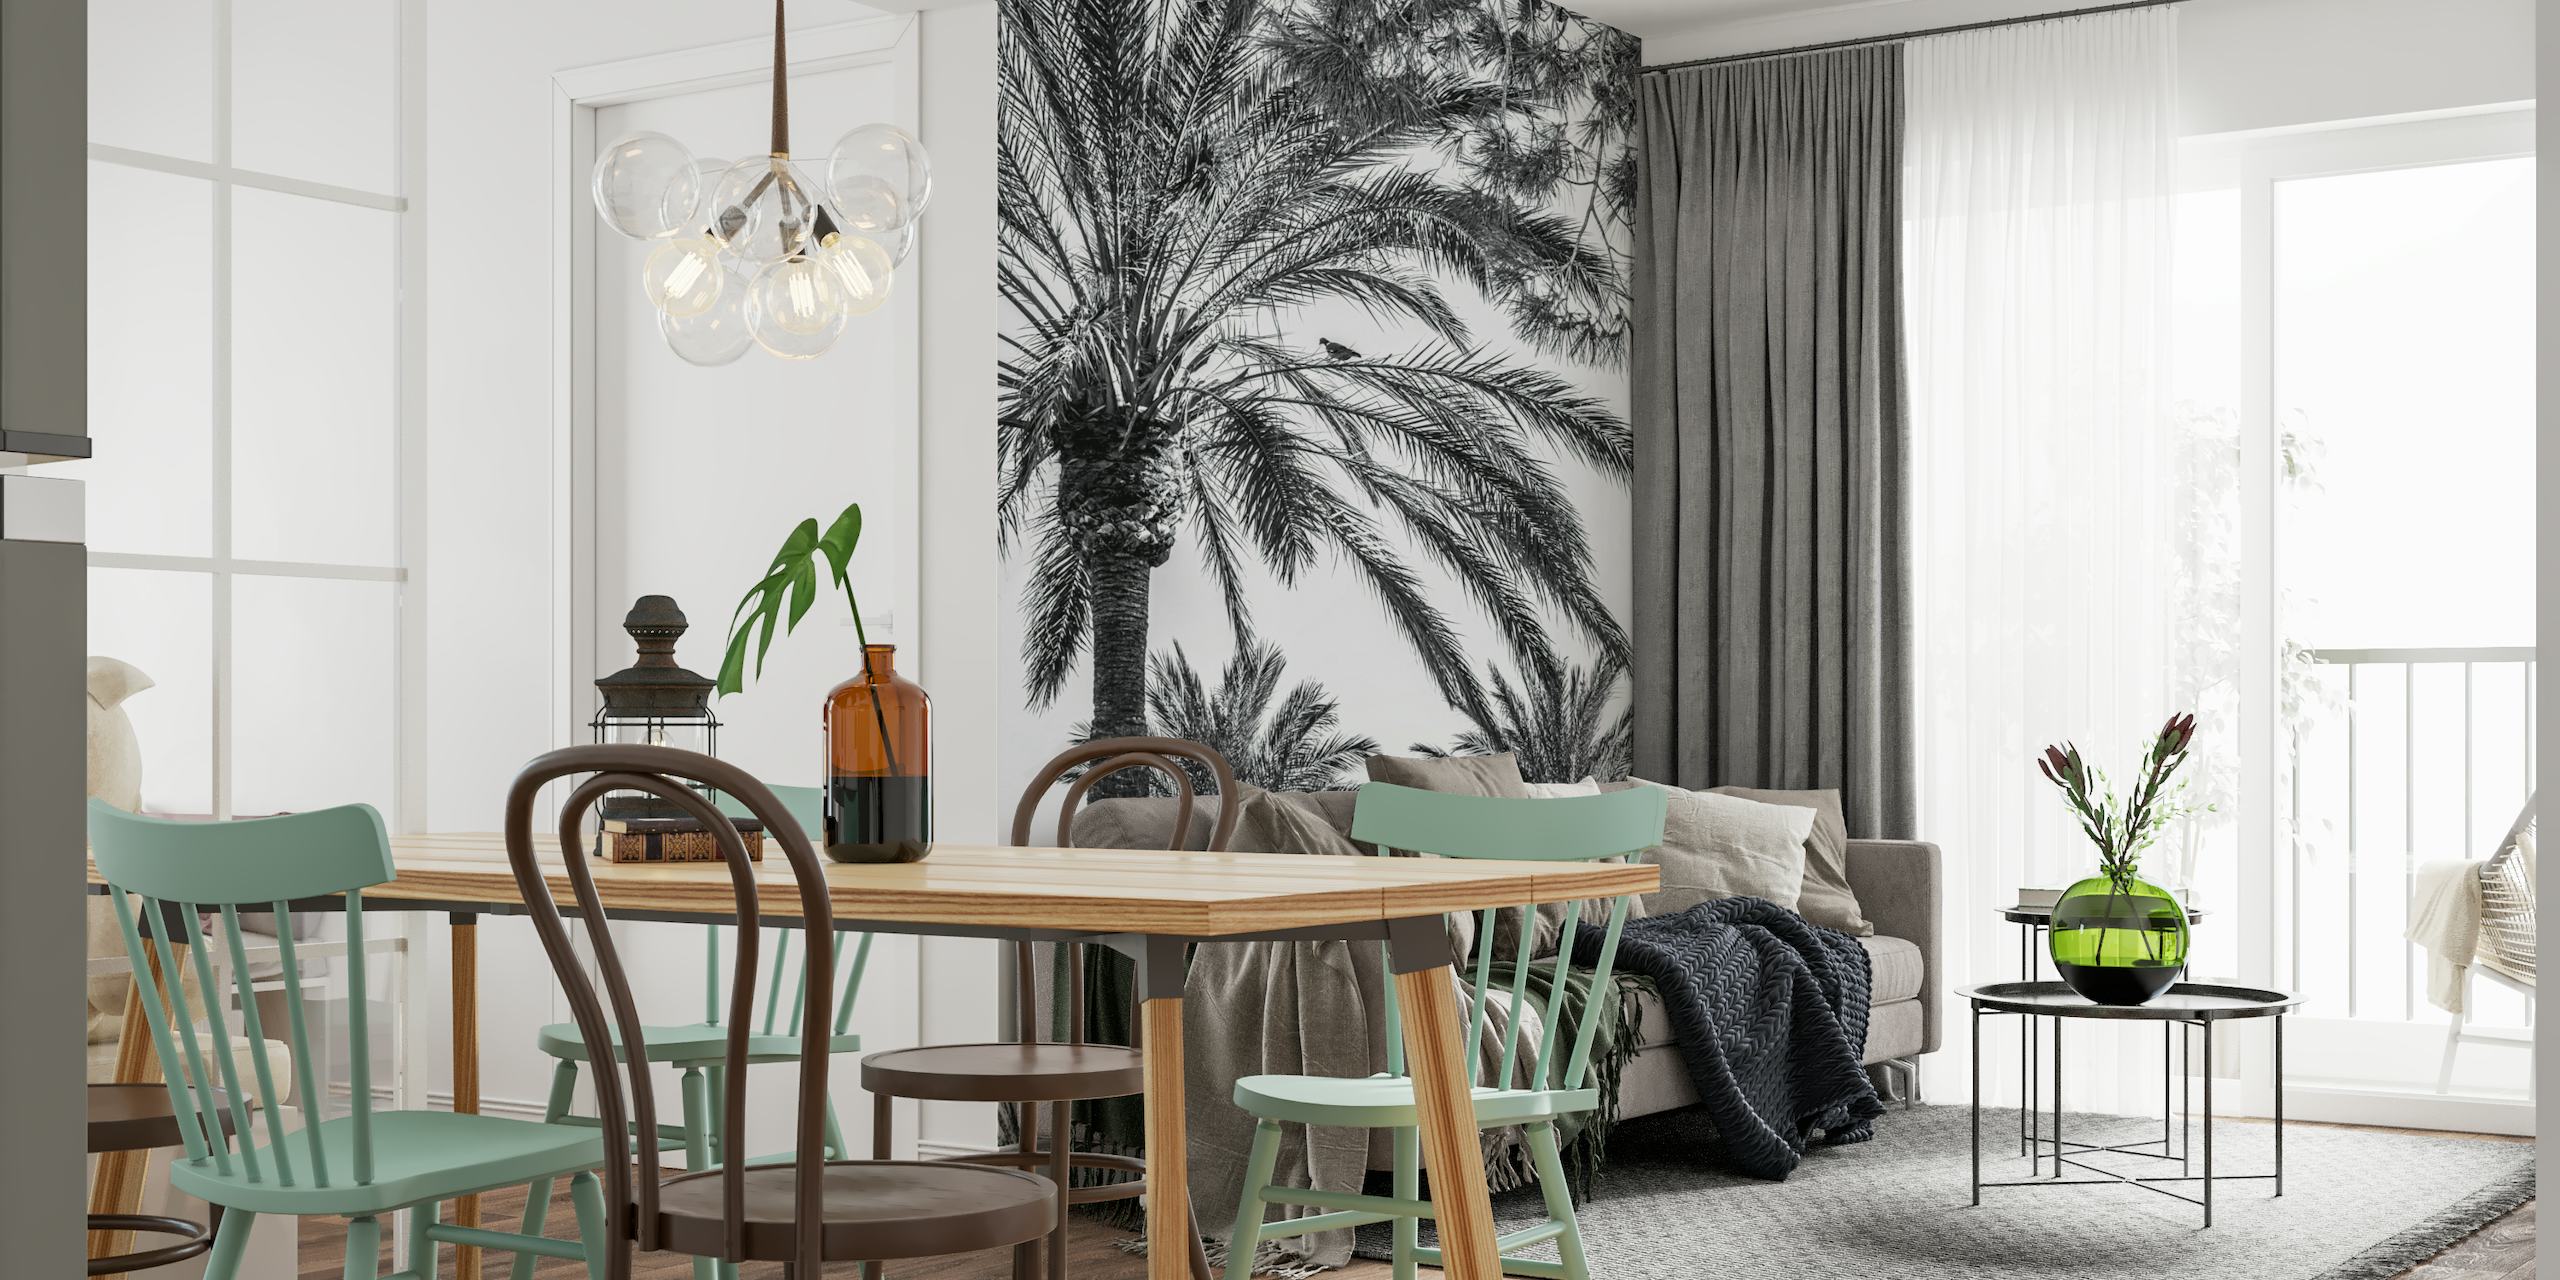 Tropical forest palm trees papel pintado